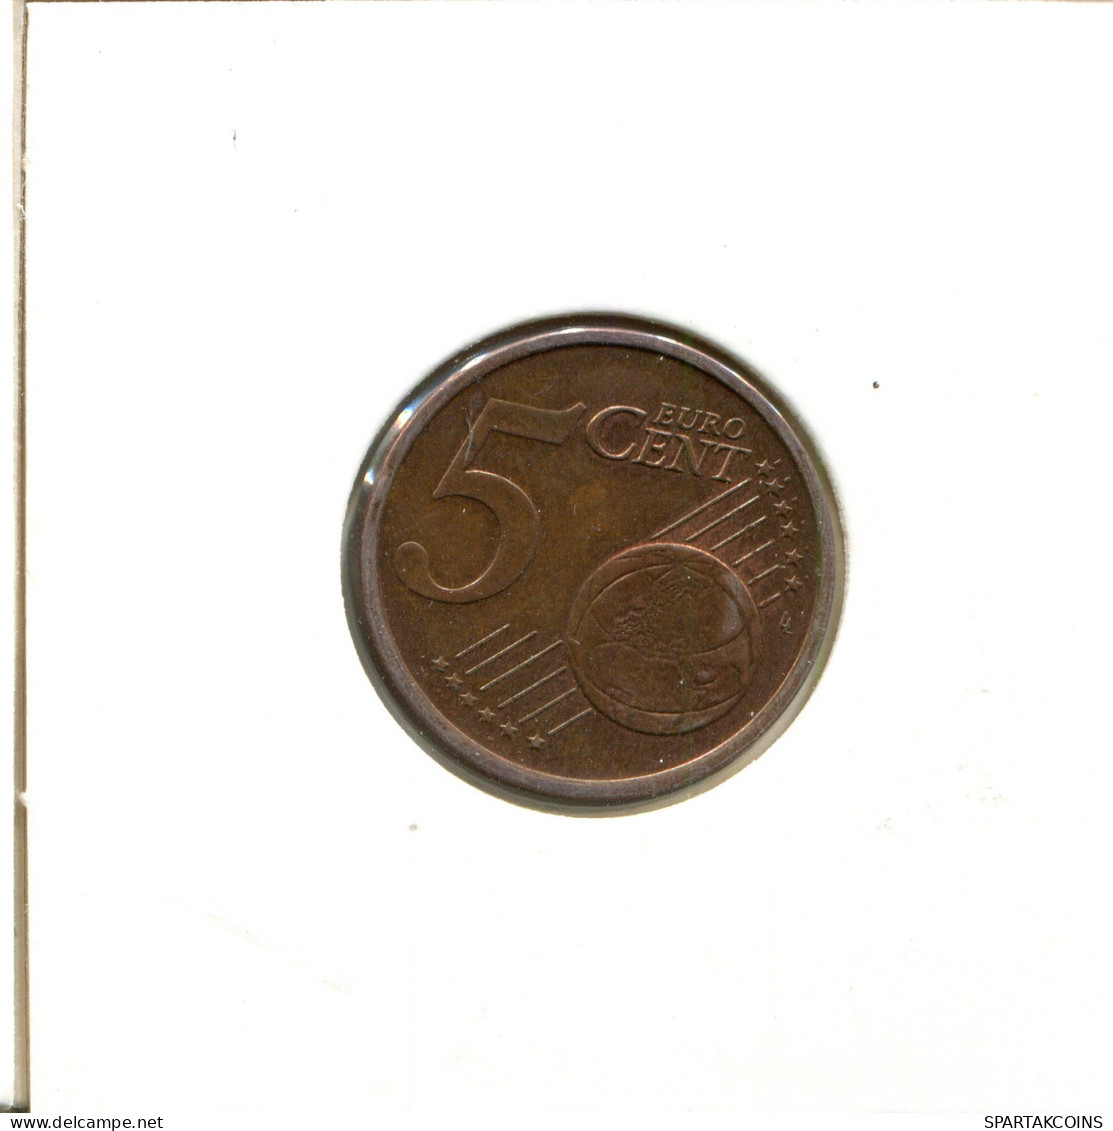 5 EURO CENTS 2005 IRELAND Coin #EU503.U - Ireland